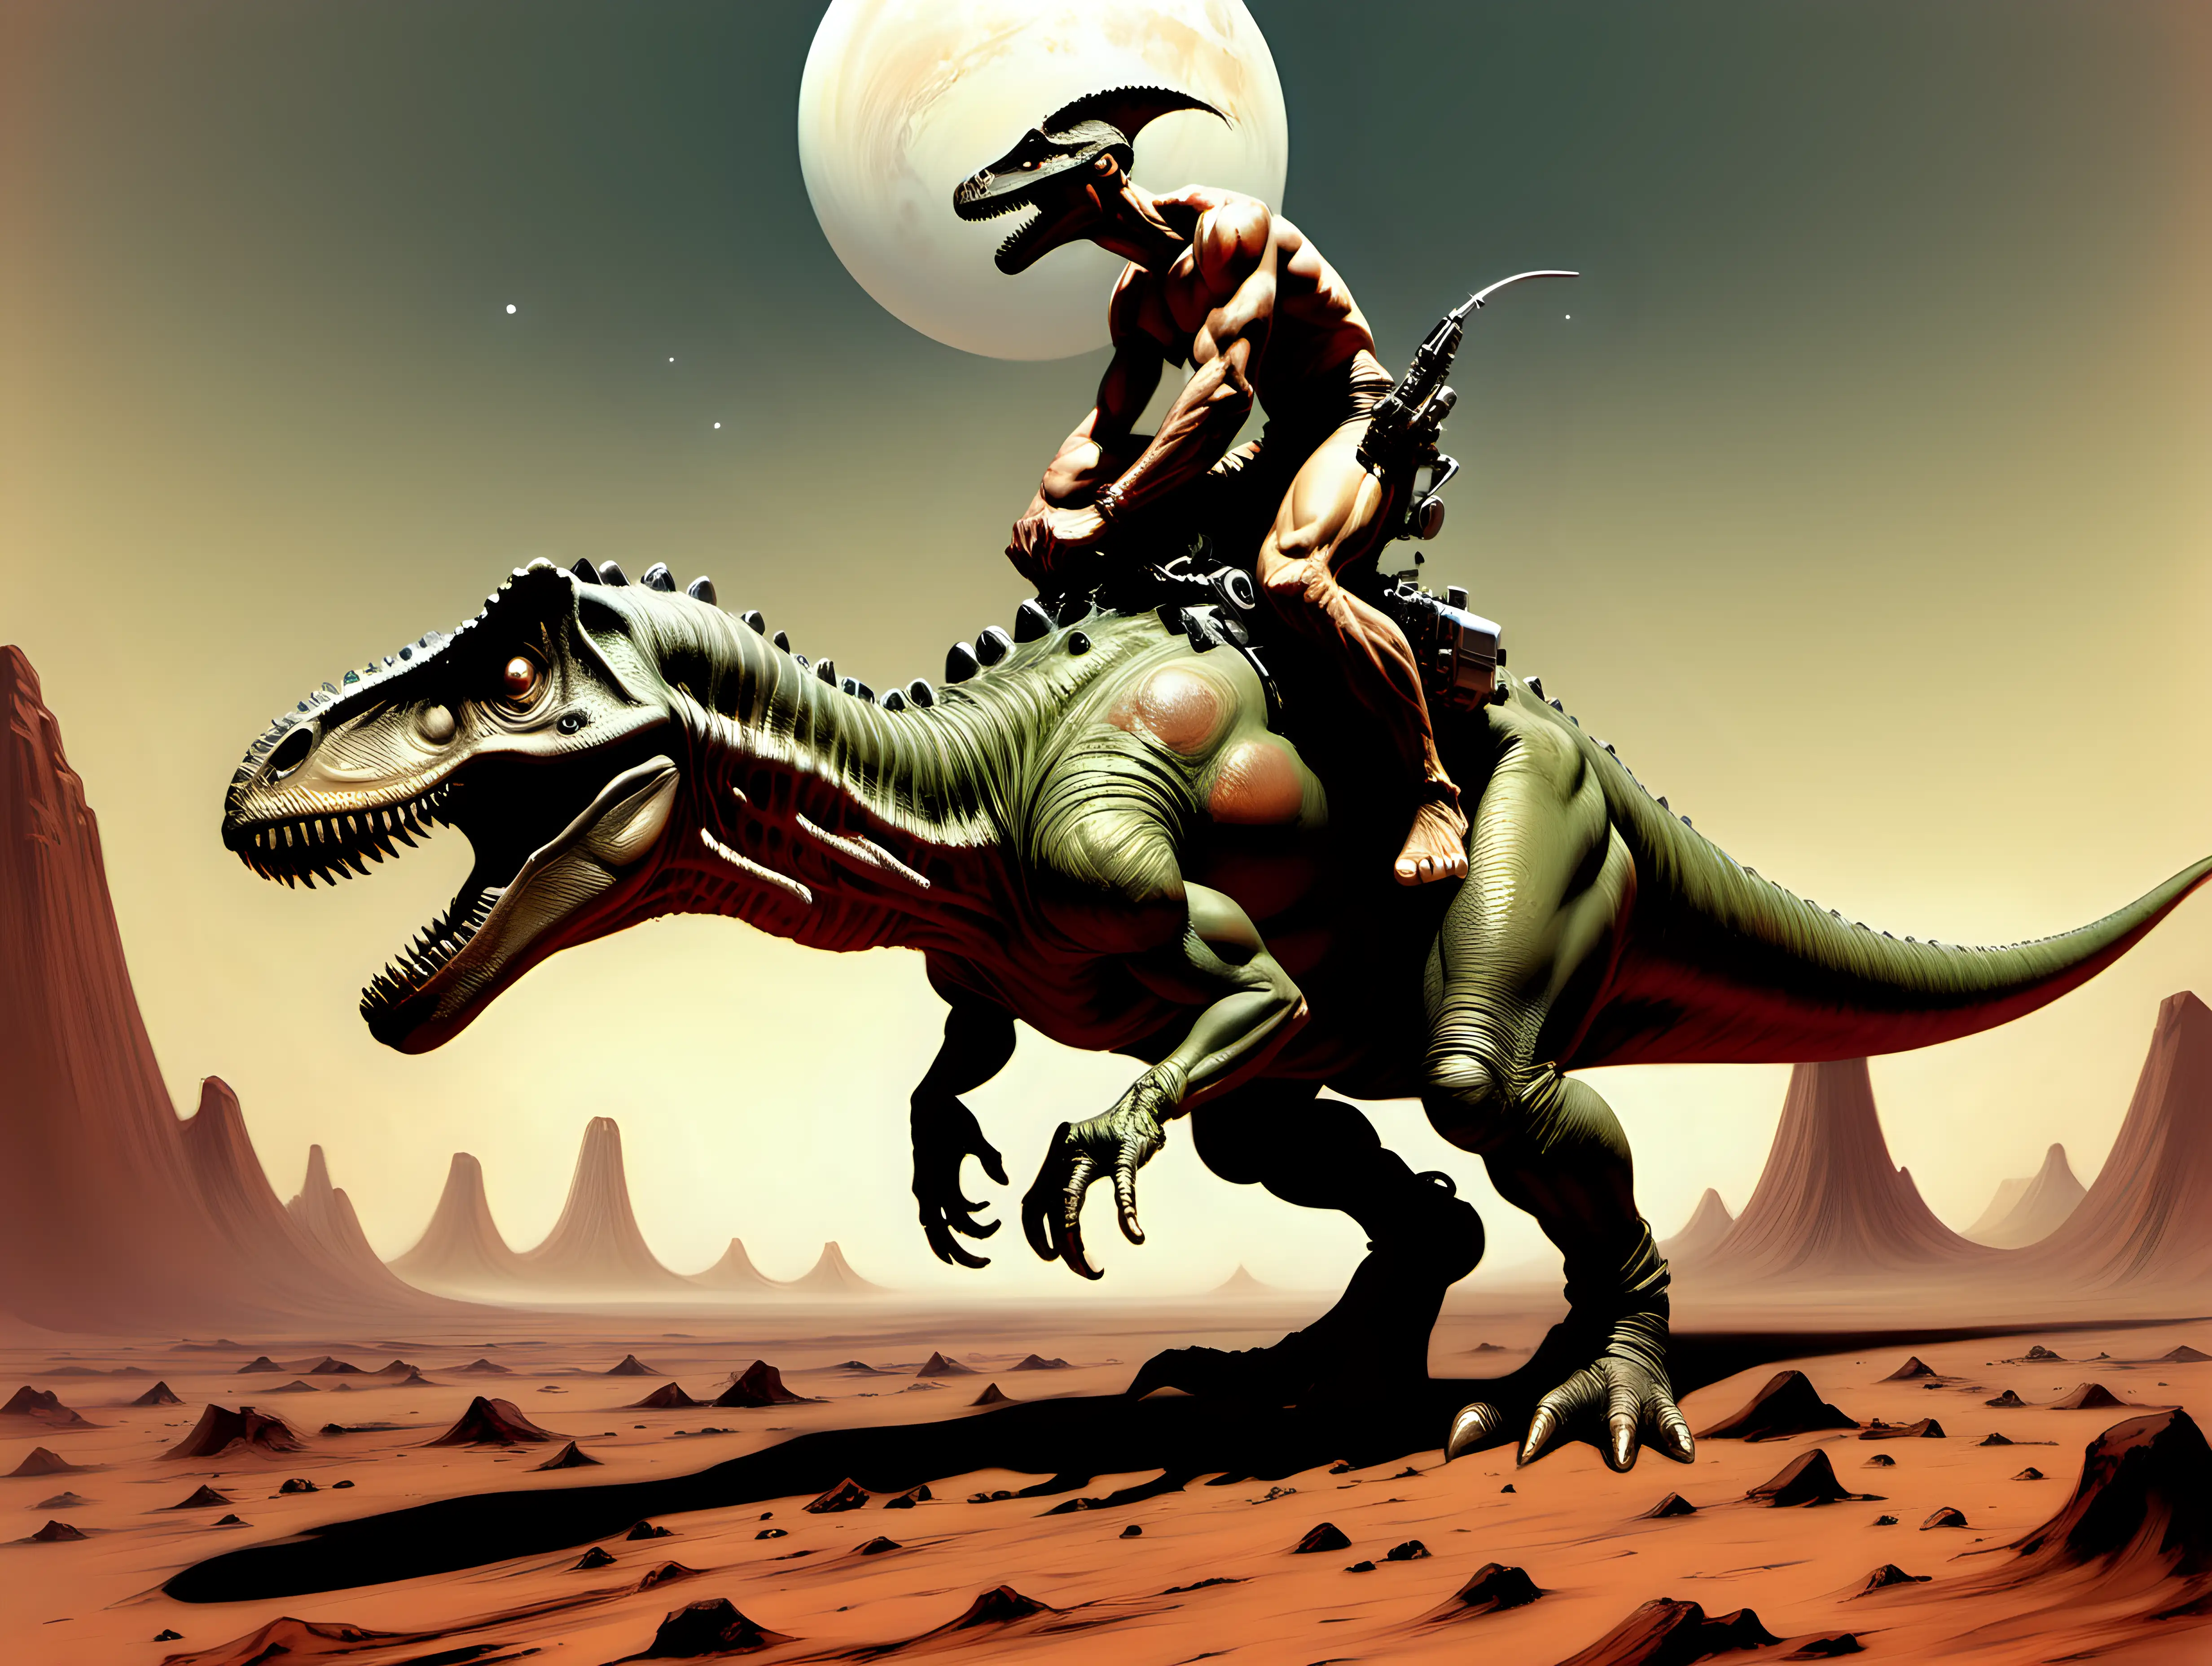 man on the back of a dinosaur stuck on Mars
Frank Frazetta style